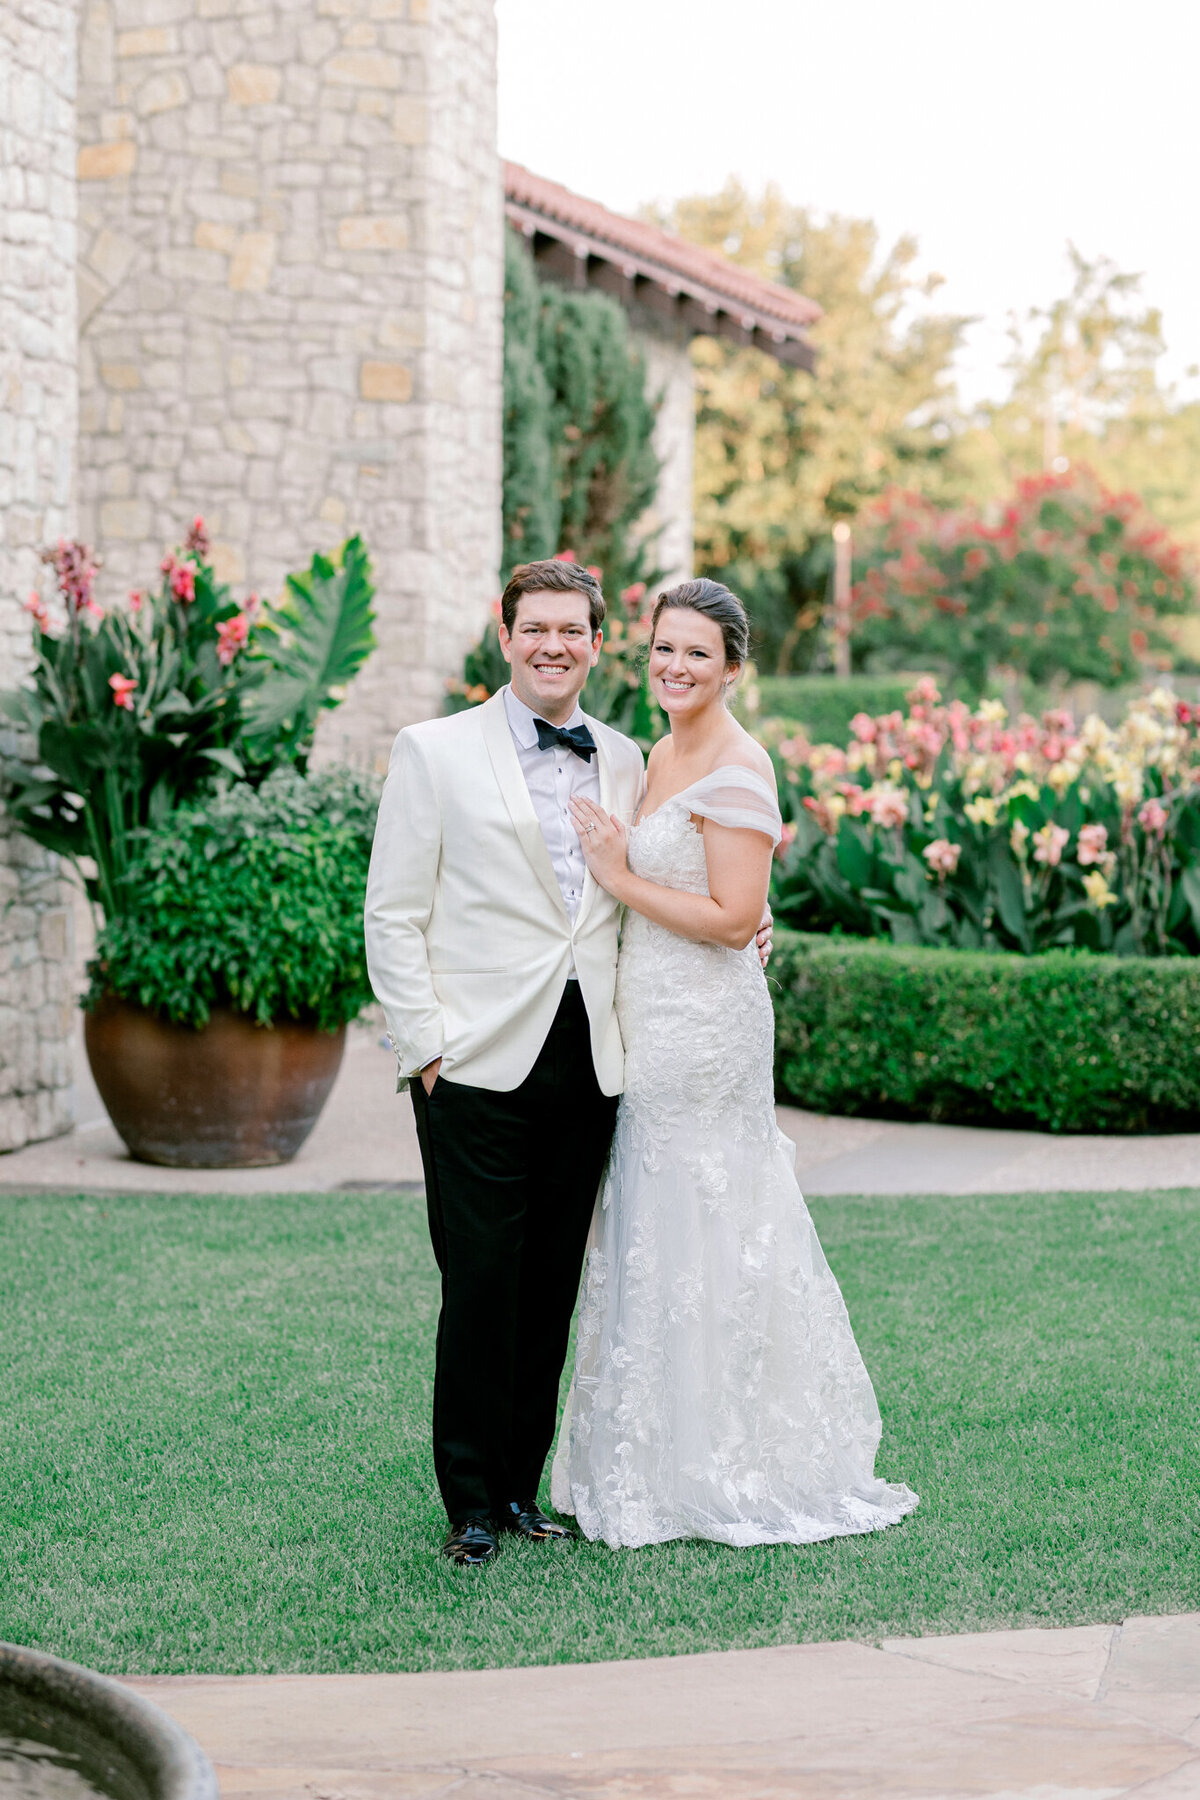 Allie & John Wedding at Royal Oaks Country Club Christ the King Church | Dallas Wedding Photographer | Sami Kathryn Photography-131